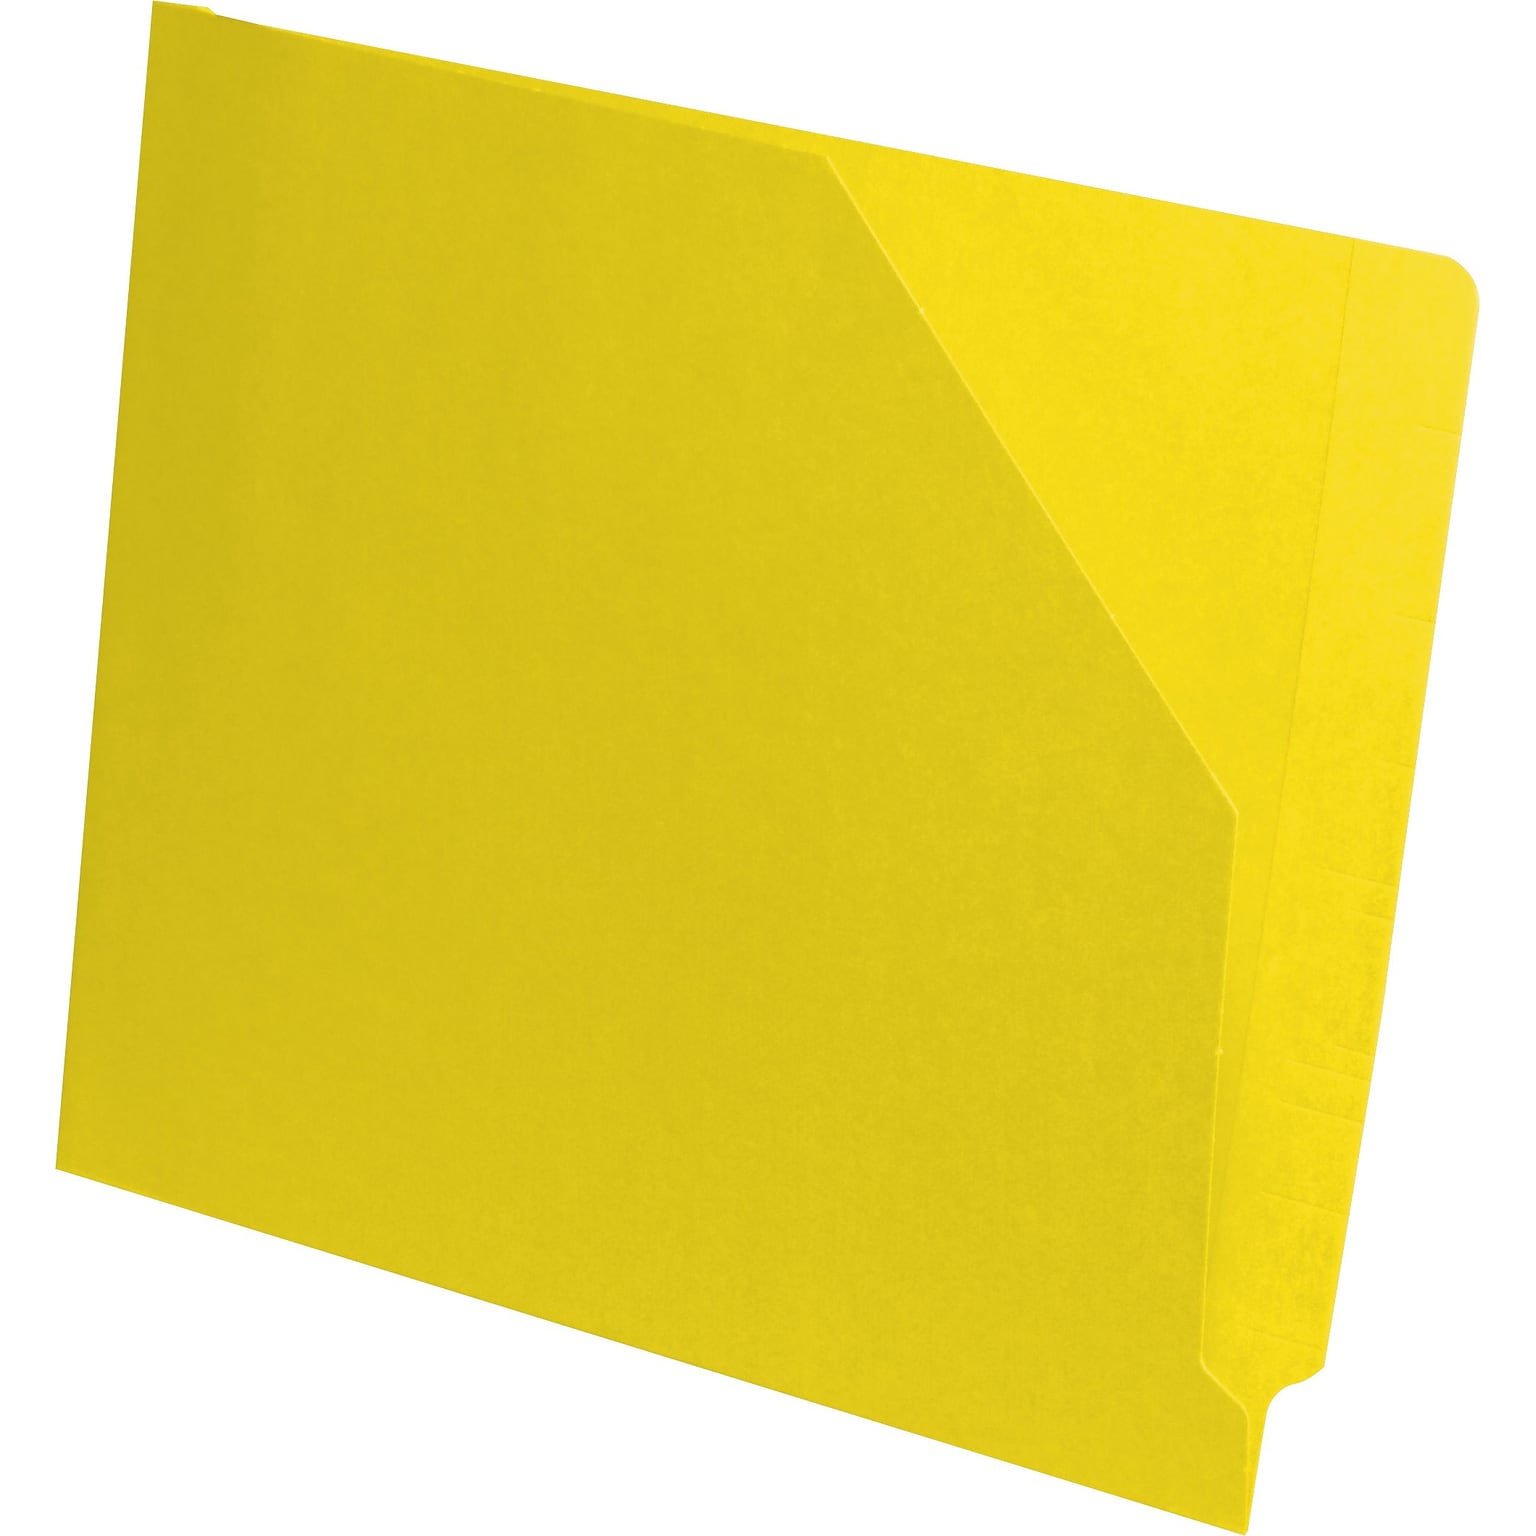 Medical Arts Press File Pocket, Letter Size, Yellow, 100/Box (51439YW)